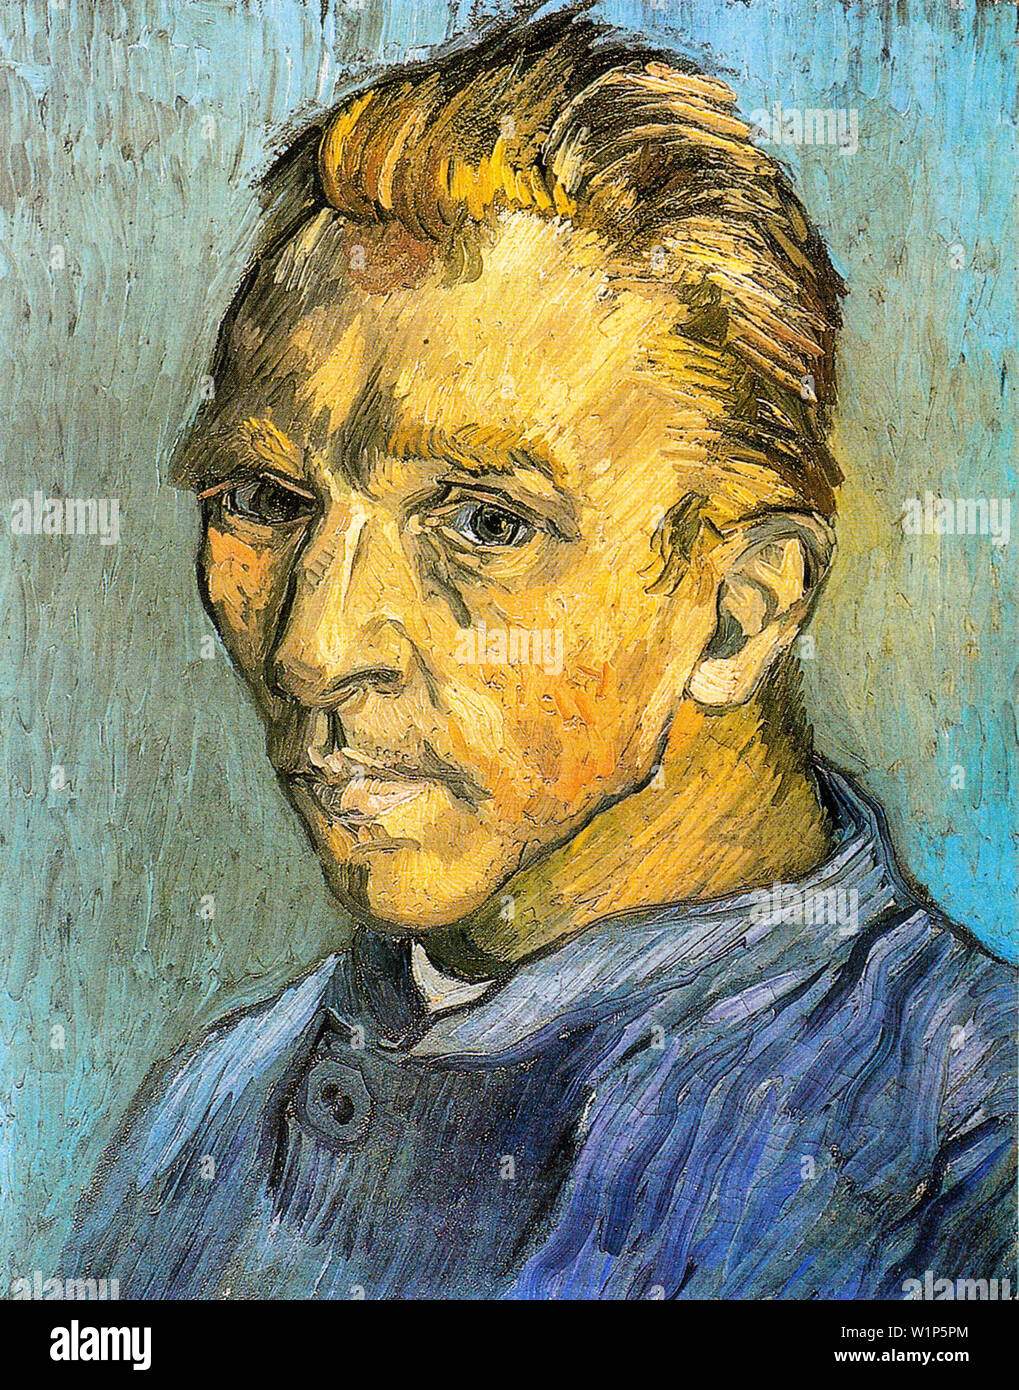 Vincent Van Gogh, Self portrait without beard, painting, 1889 Stock Photo